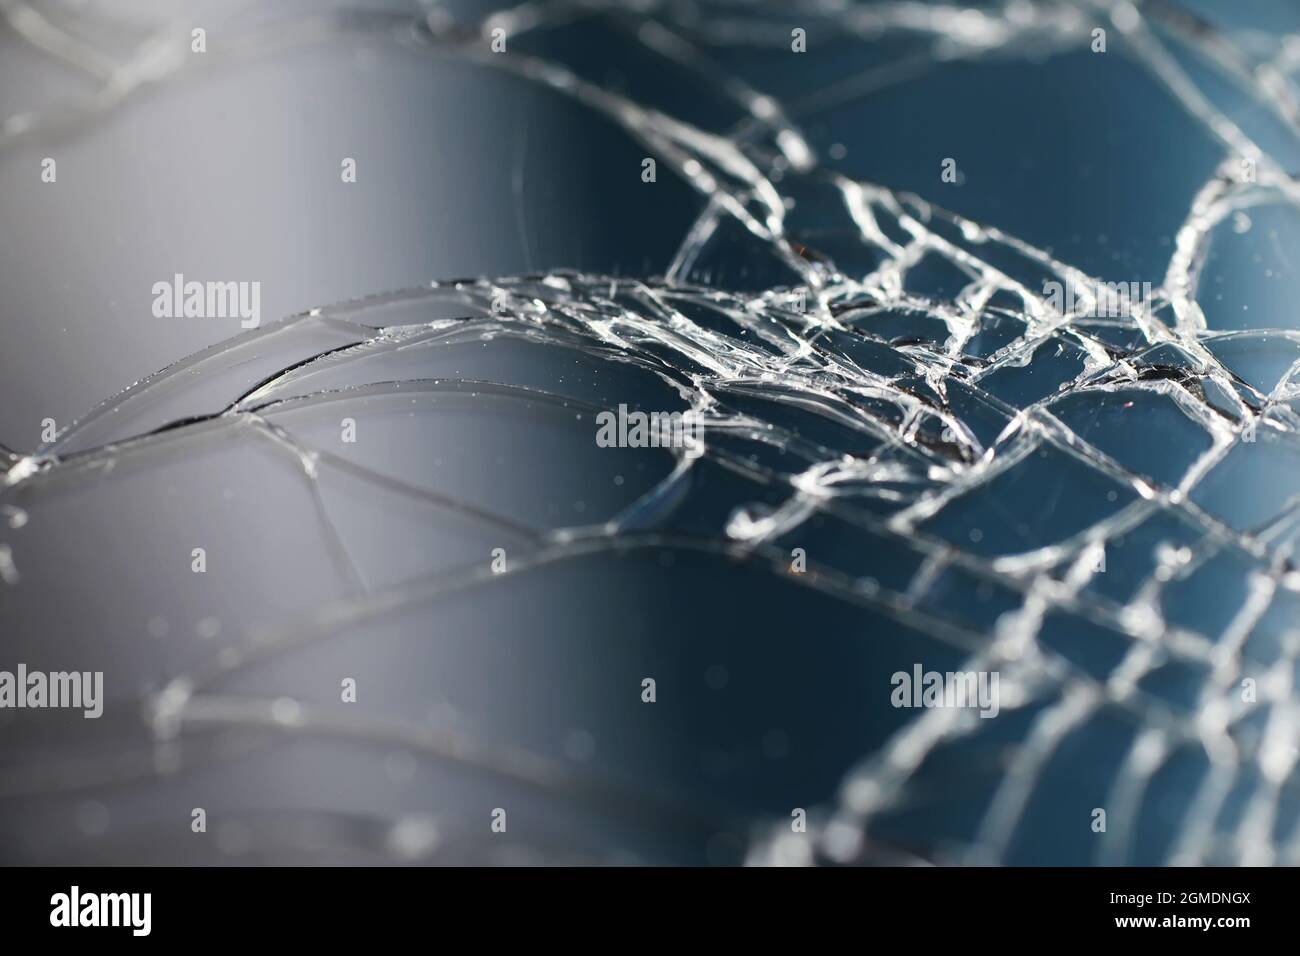 Crack on the glass. Broken screen. Broken phone. Cracked glass background.  White cracks in glass Stock Photo - Alamy